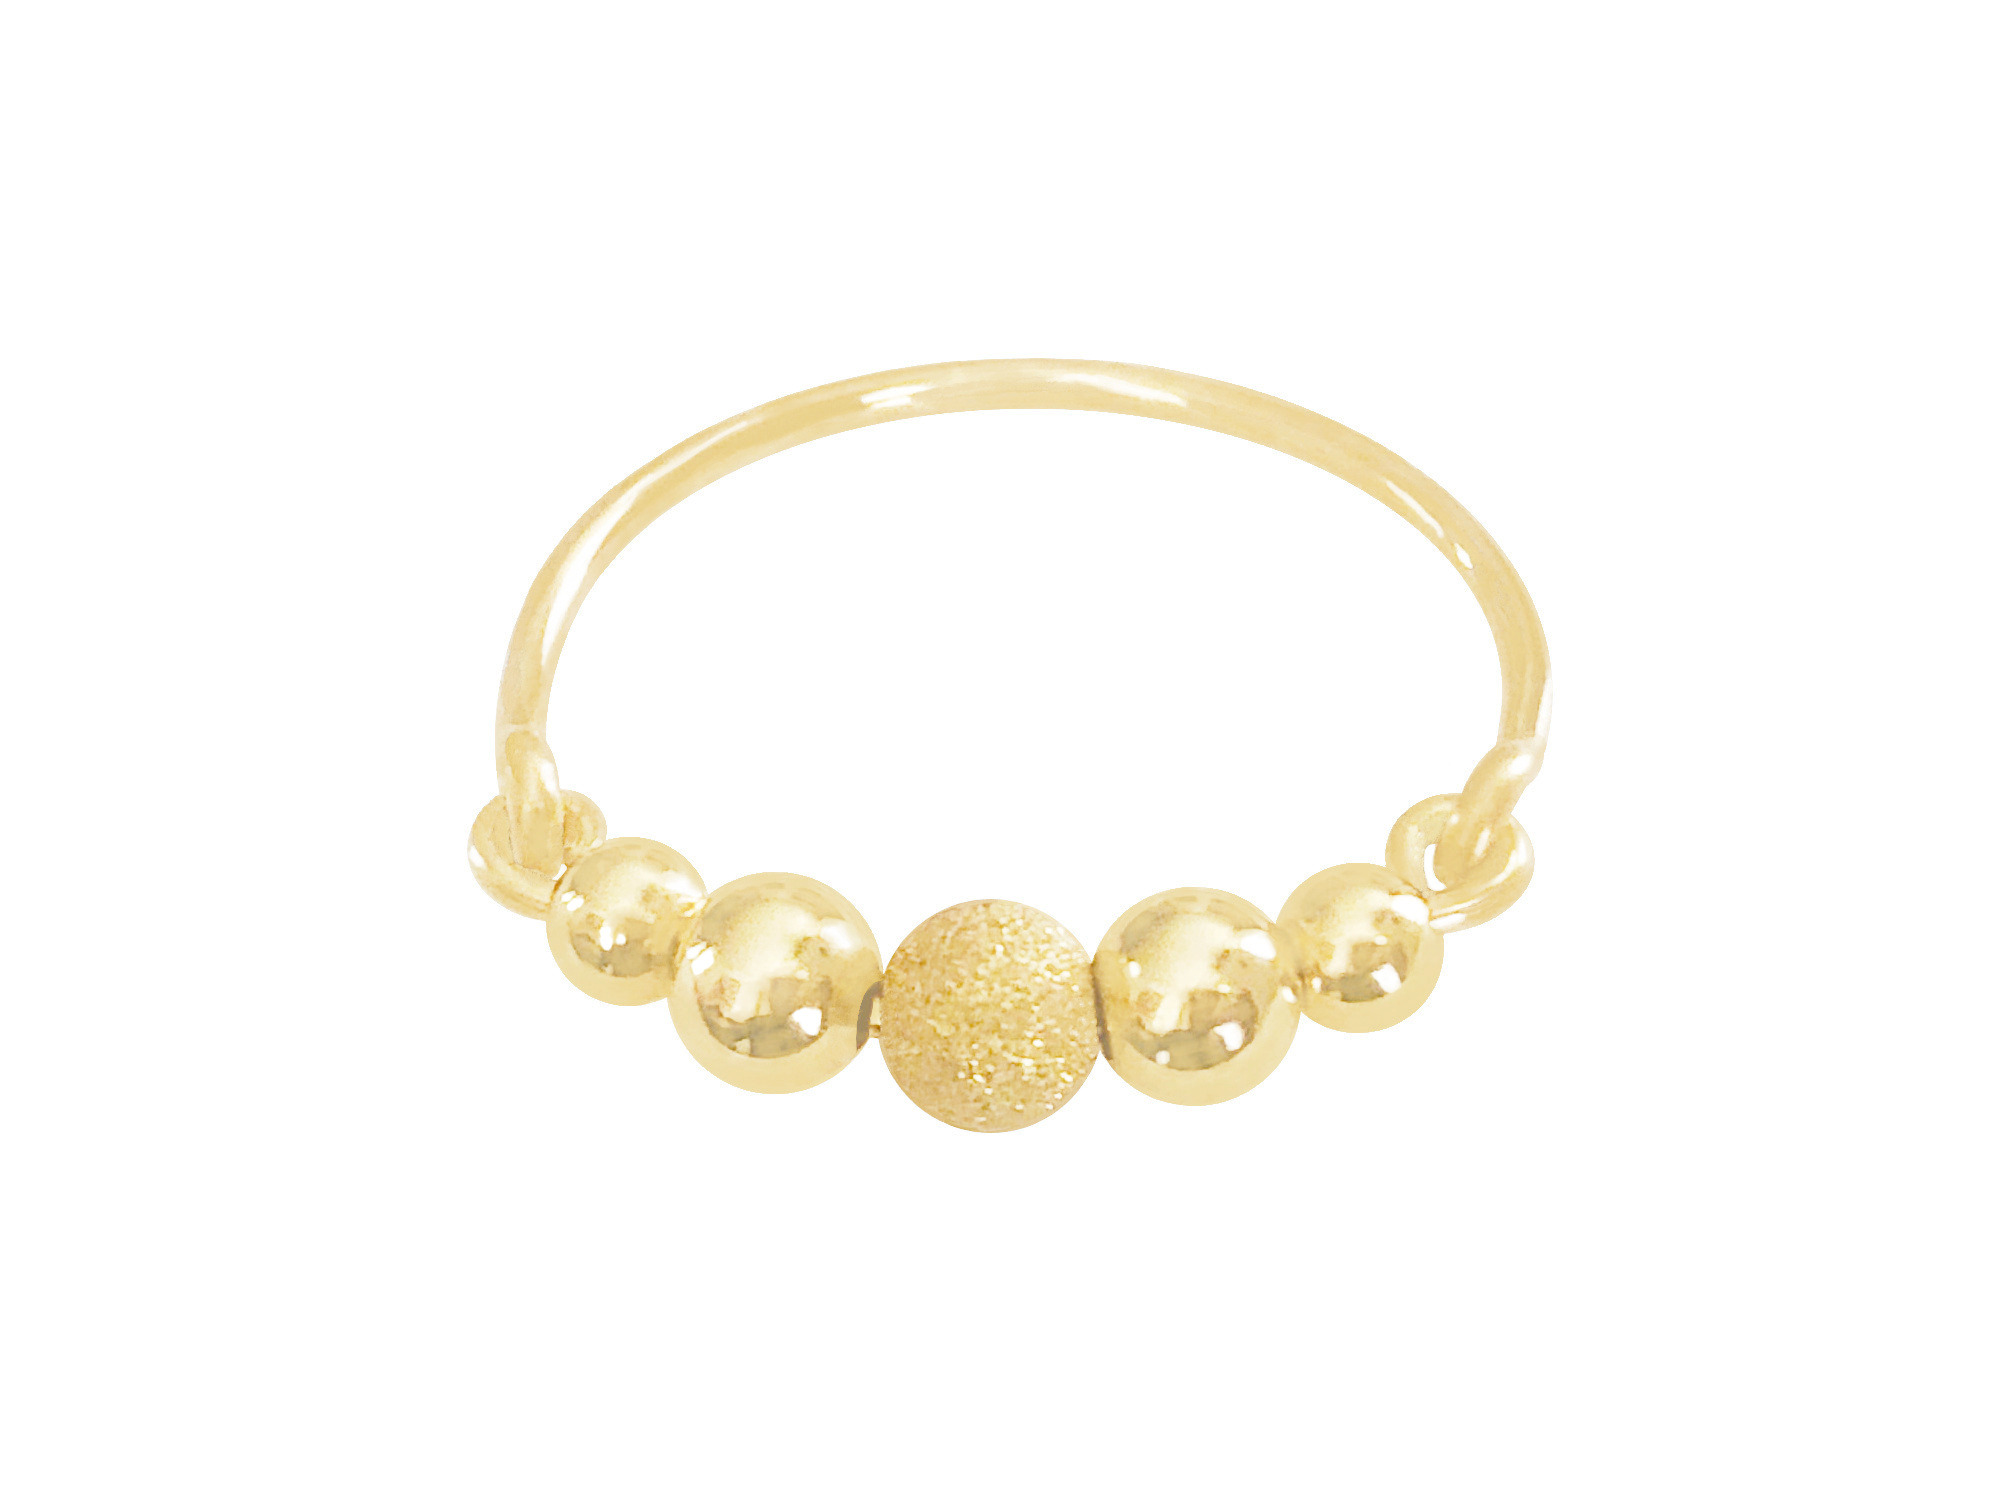 Bague HANANE or gold filled 14k anneau et perles strass-minimaliste-bohème - MARJANE et Cie